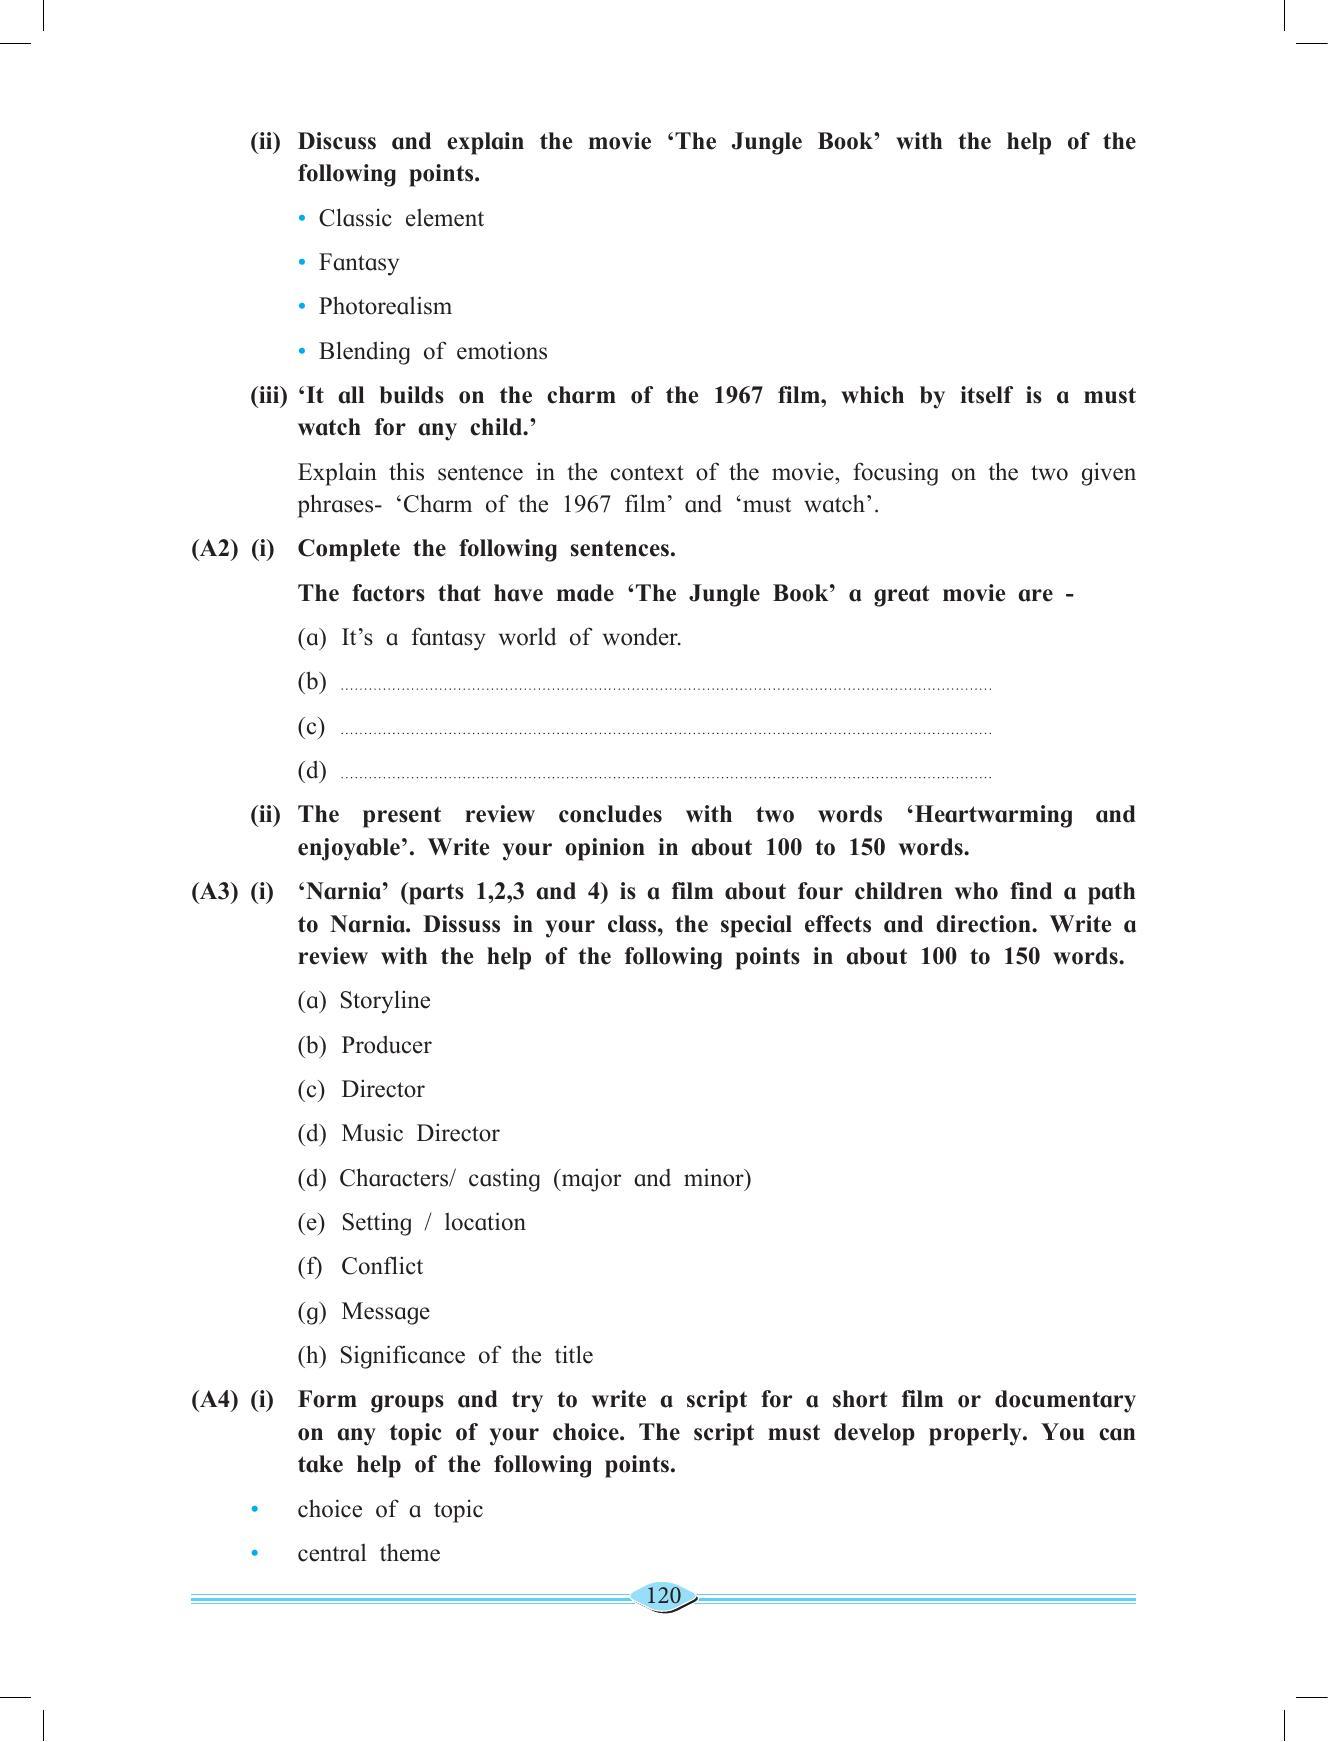 Maharashtra Board Class 11 English Textbook - Page 134